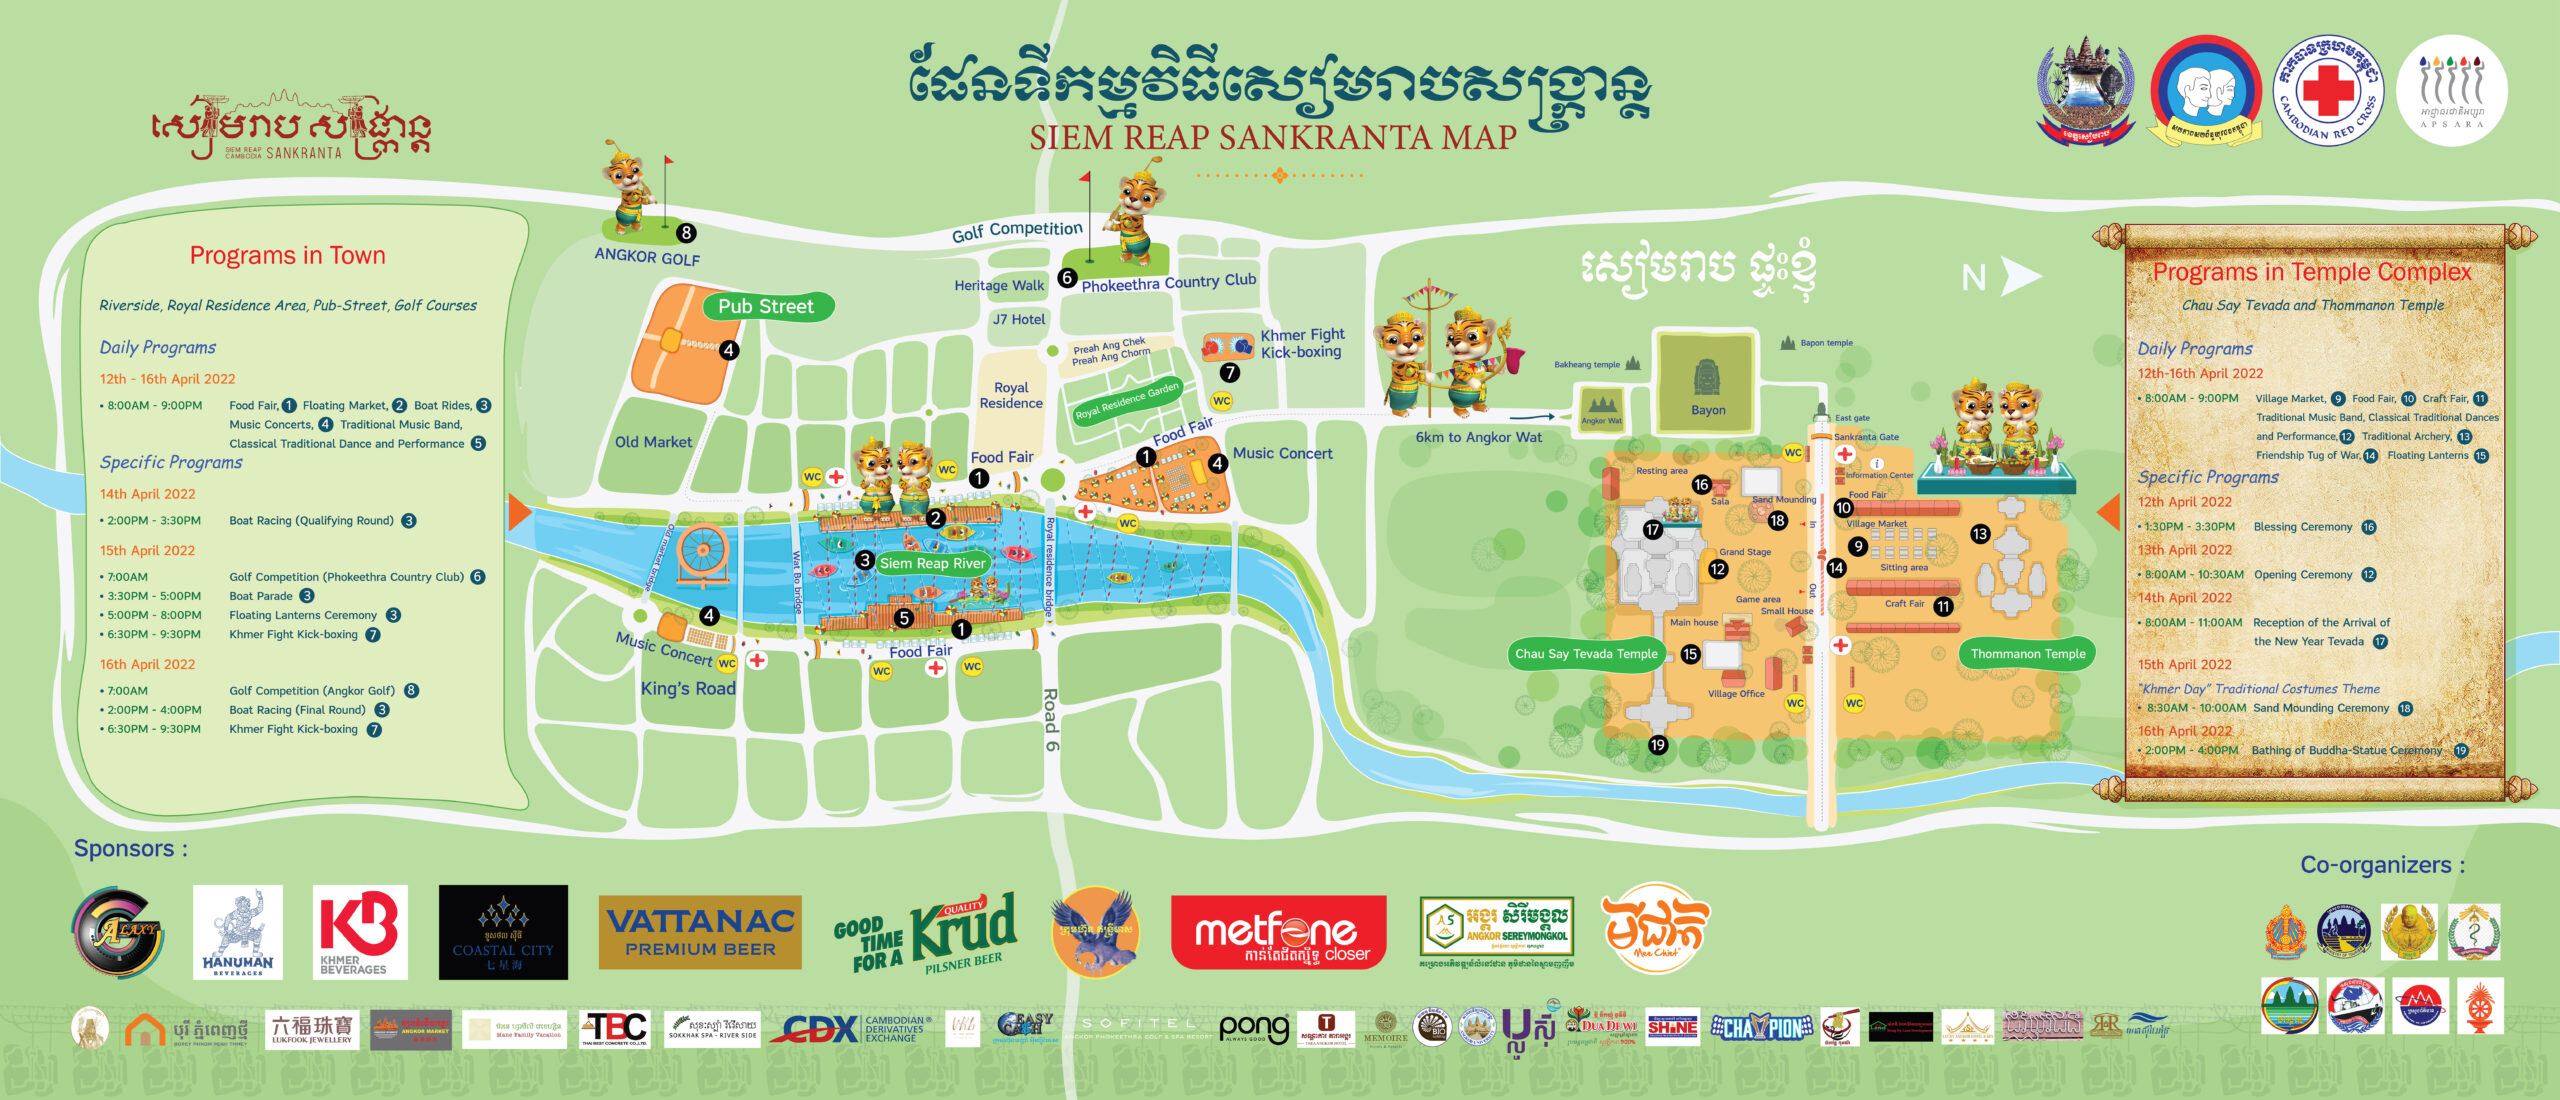 Siem Reap Khmer New Year Program 2022